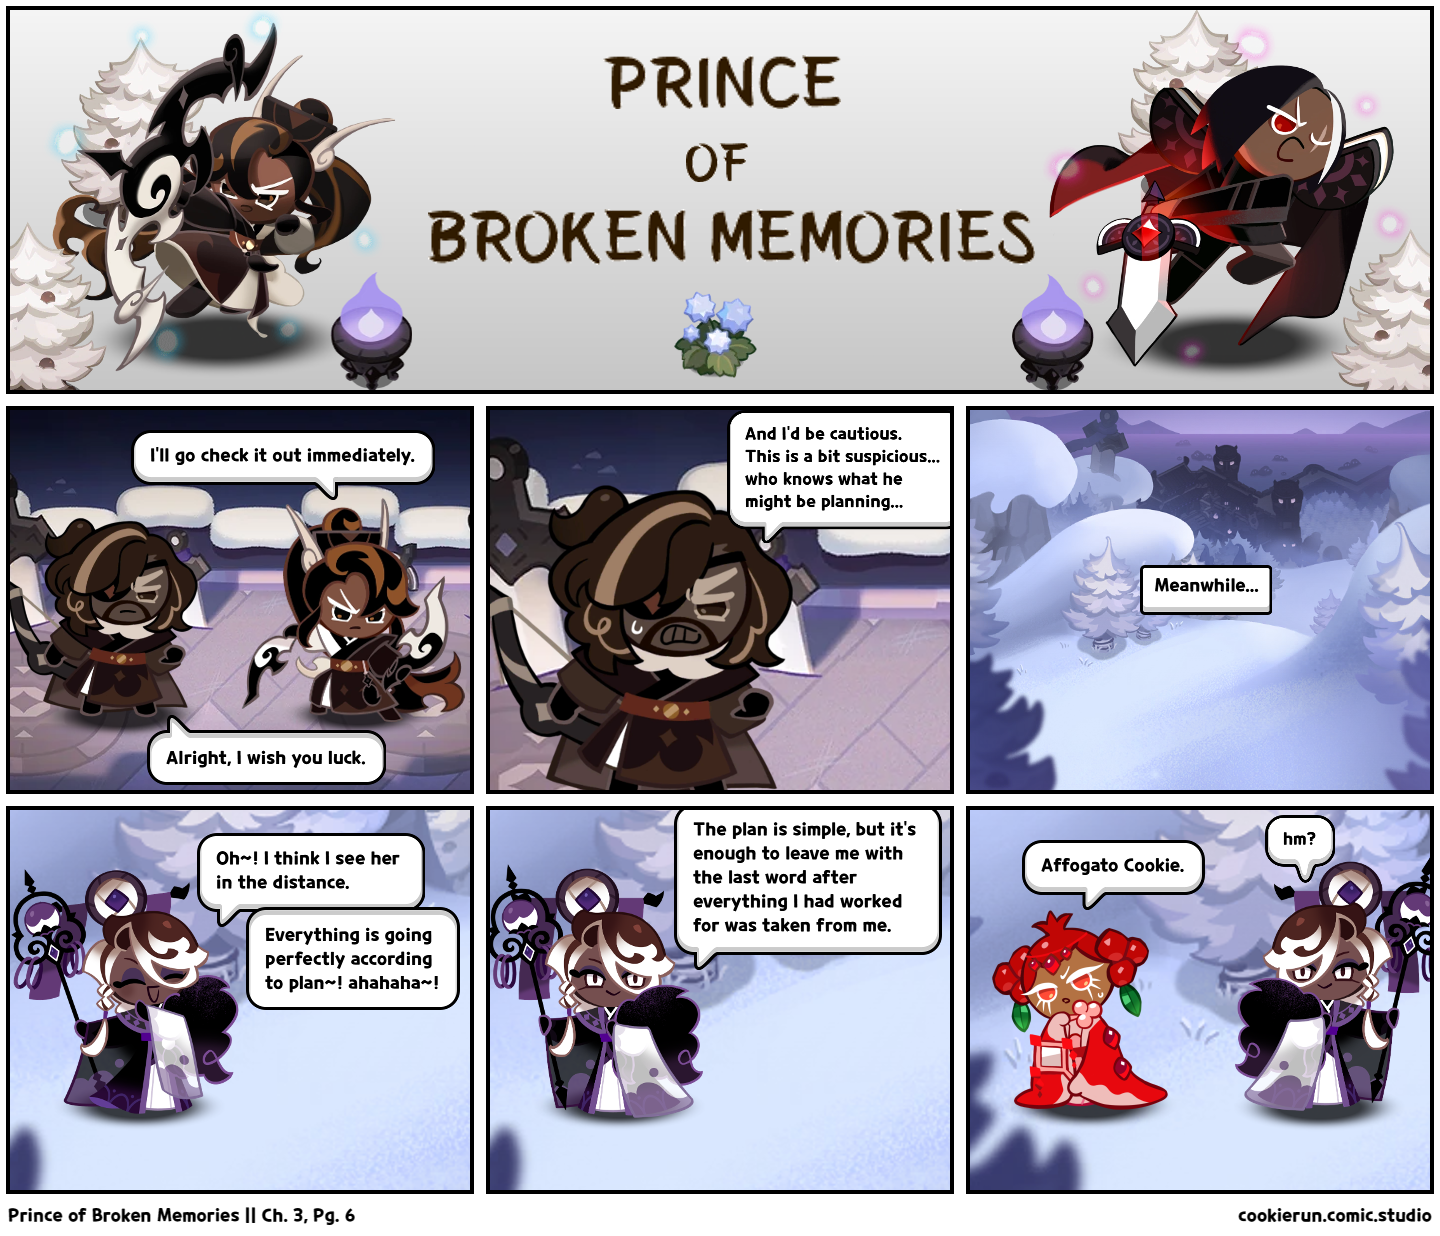 Prince of Broken Memories || Ch. 3, Pg. 6